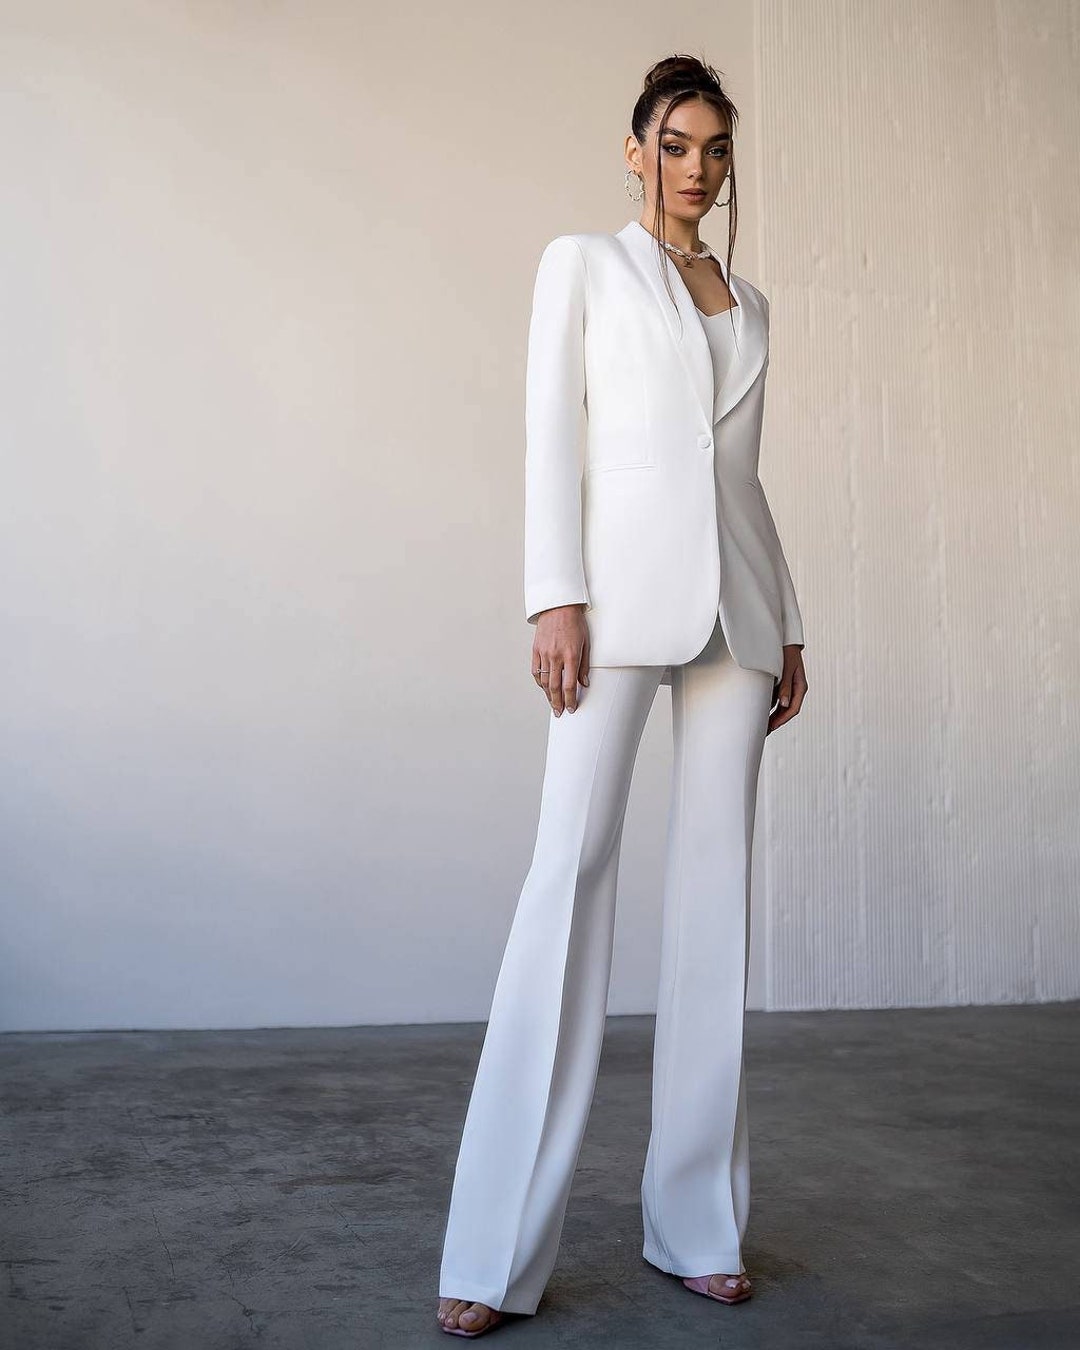 White Bridal Pantsuit for Civil or Courthouse Wedding White - Etsy